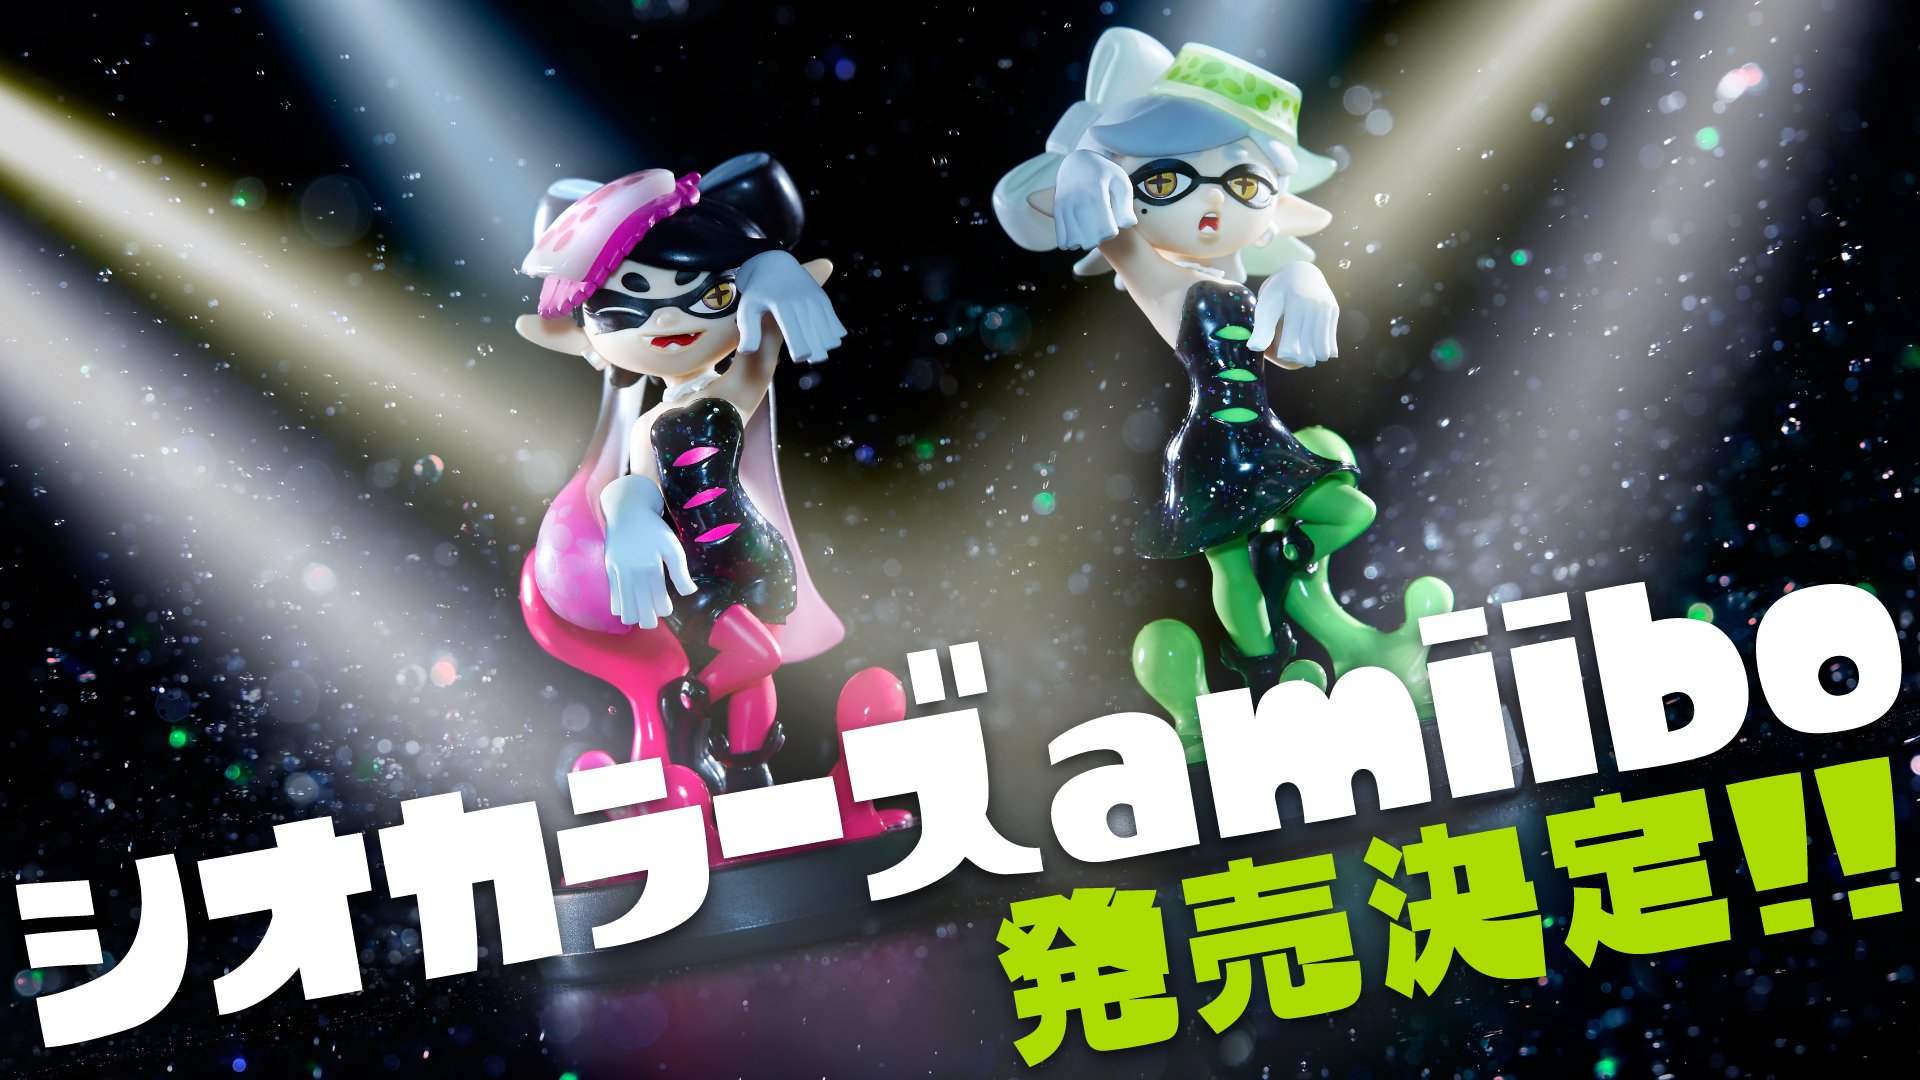 Splatoon Marie Callie Amiibo Announced New Colours For Inkling Amiibo Splatoon Koshien 17 Perfectly Nintendo